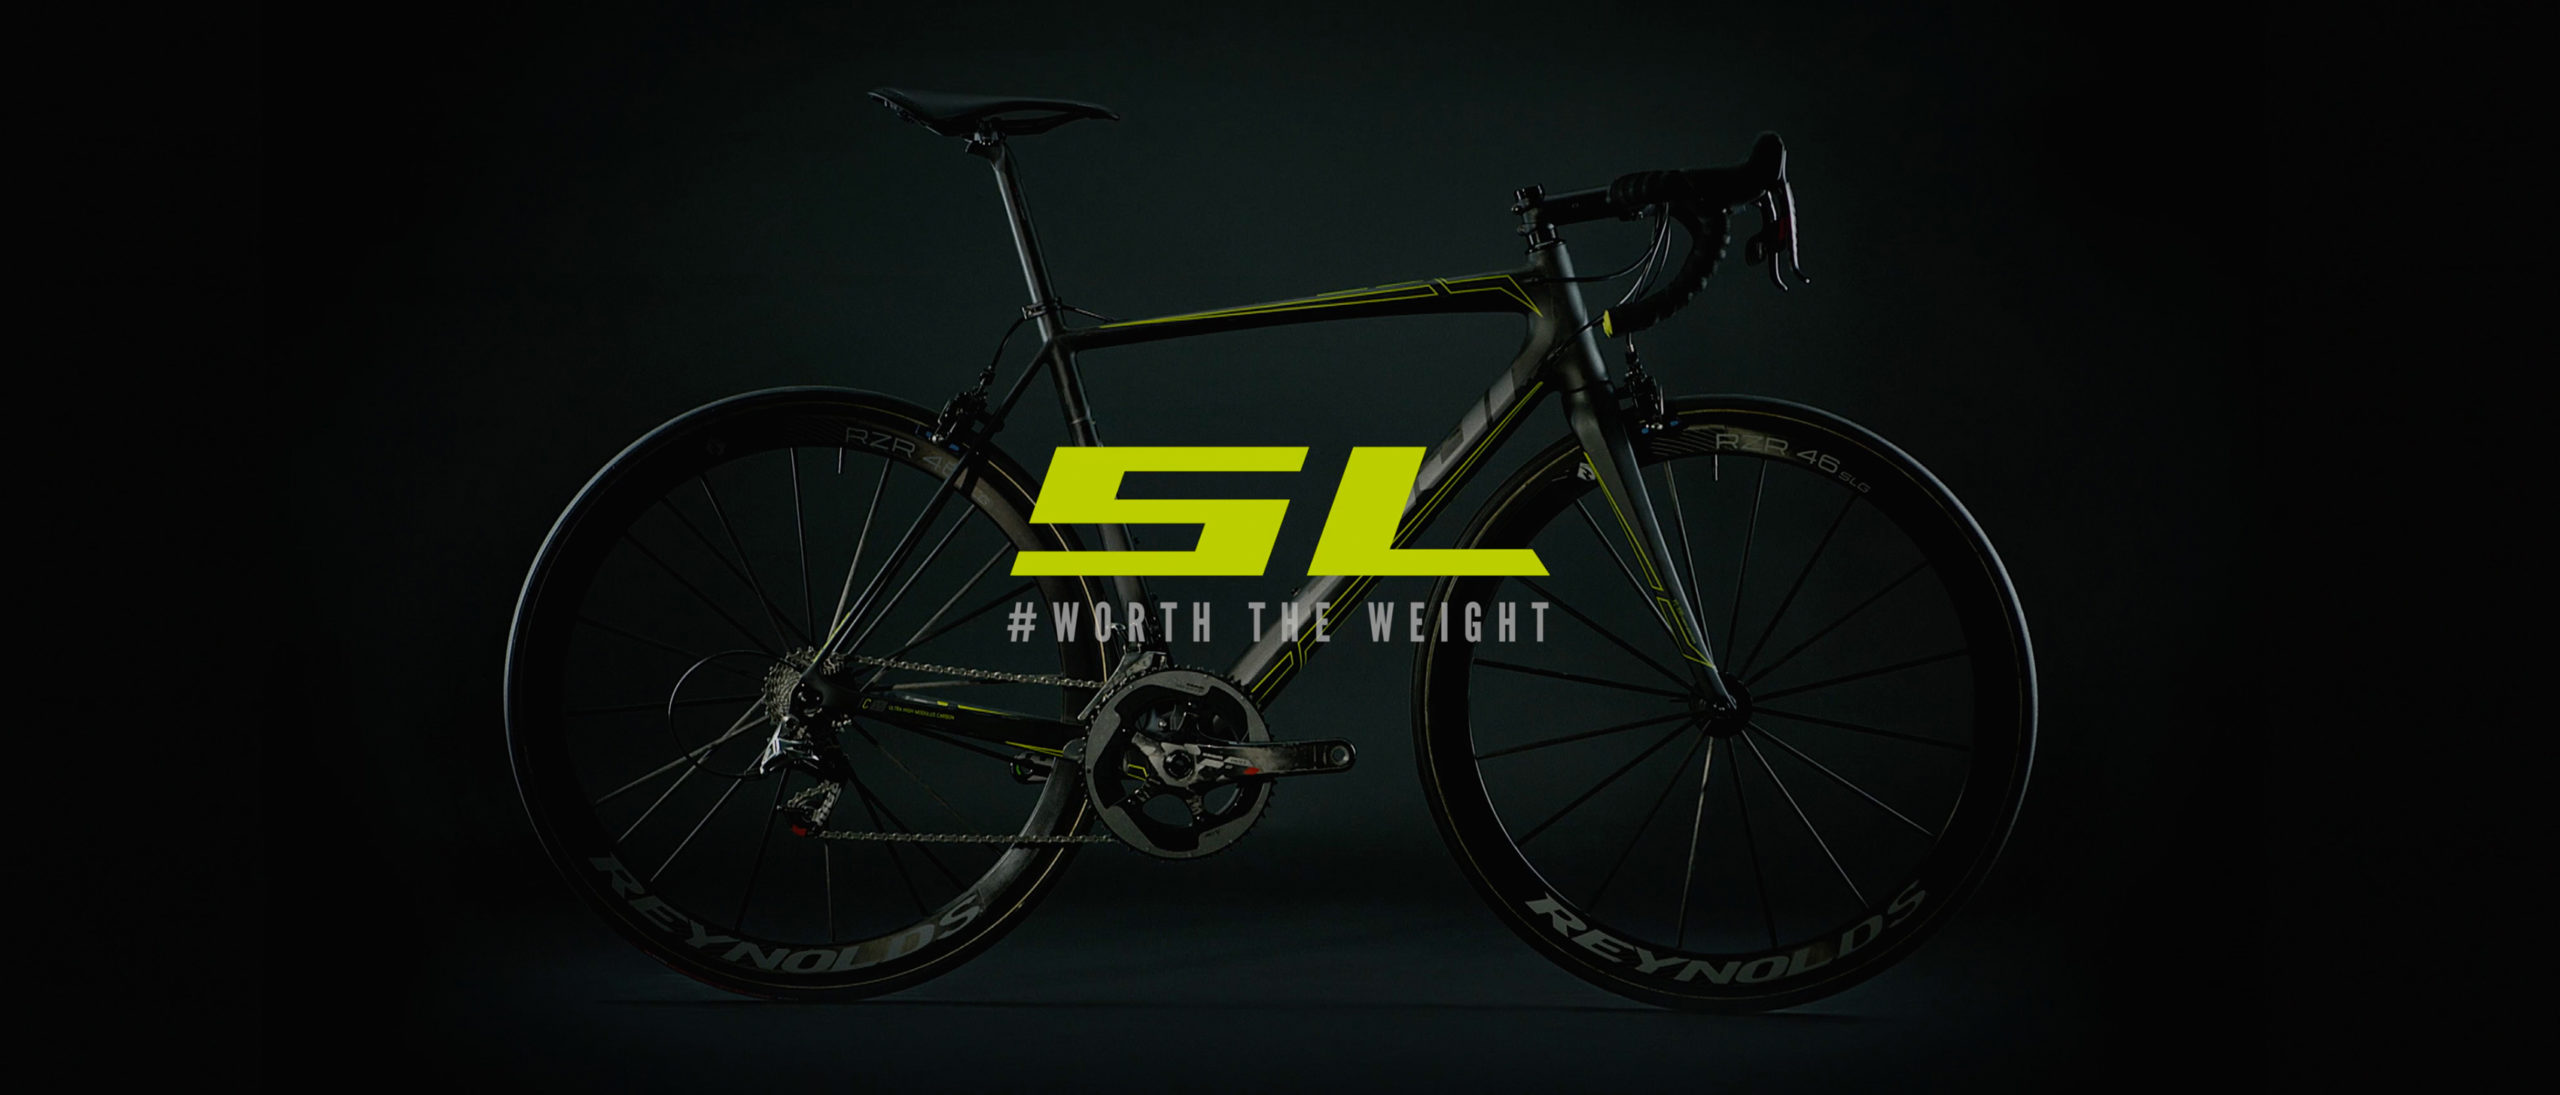 New-Thought-Fuji-Bikes-Film-Production-SL-Bike-Title-Card-Image-fullscreen